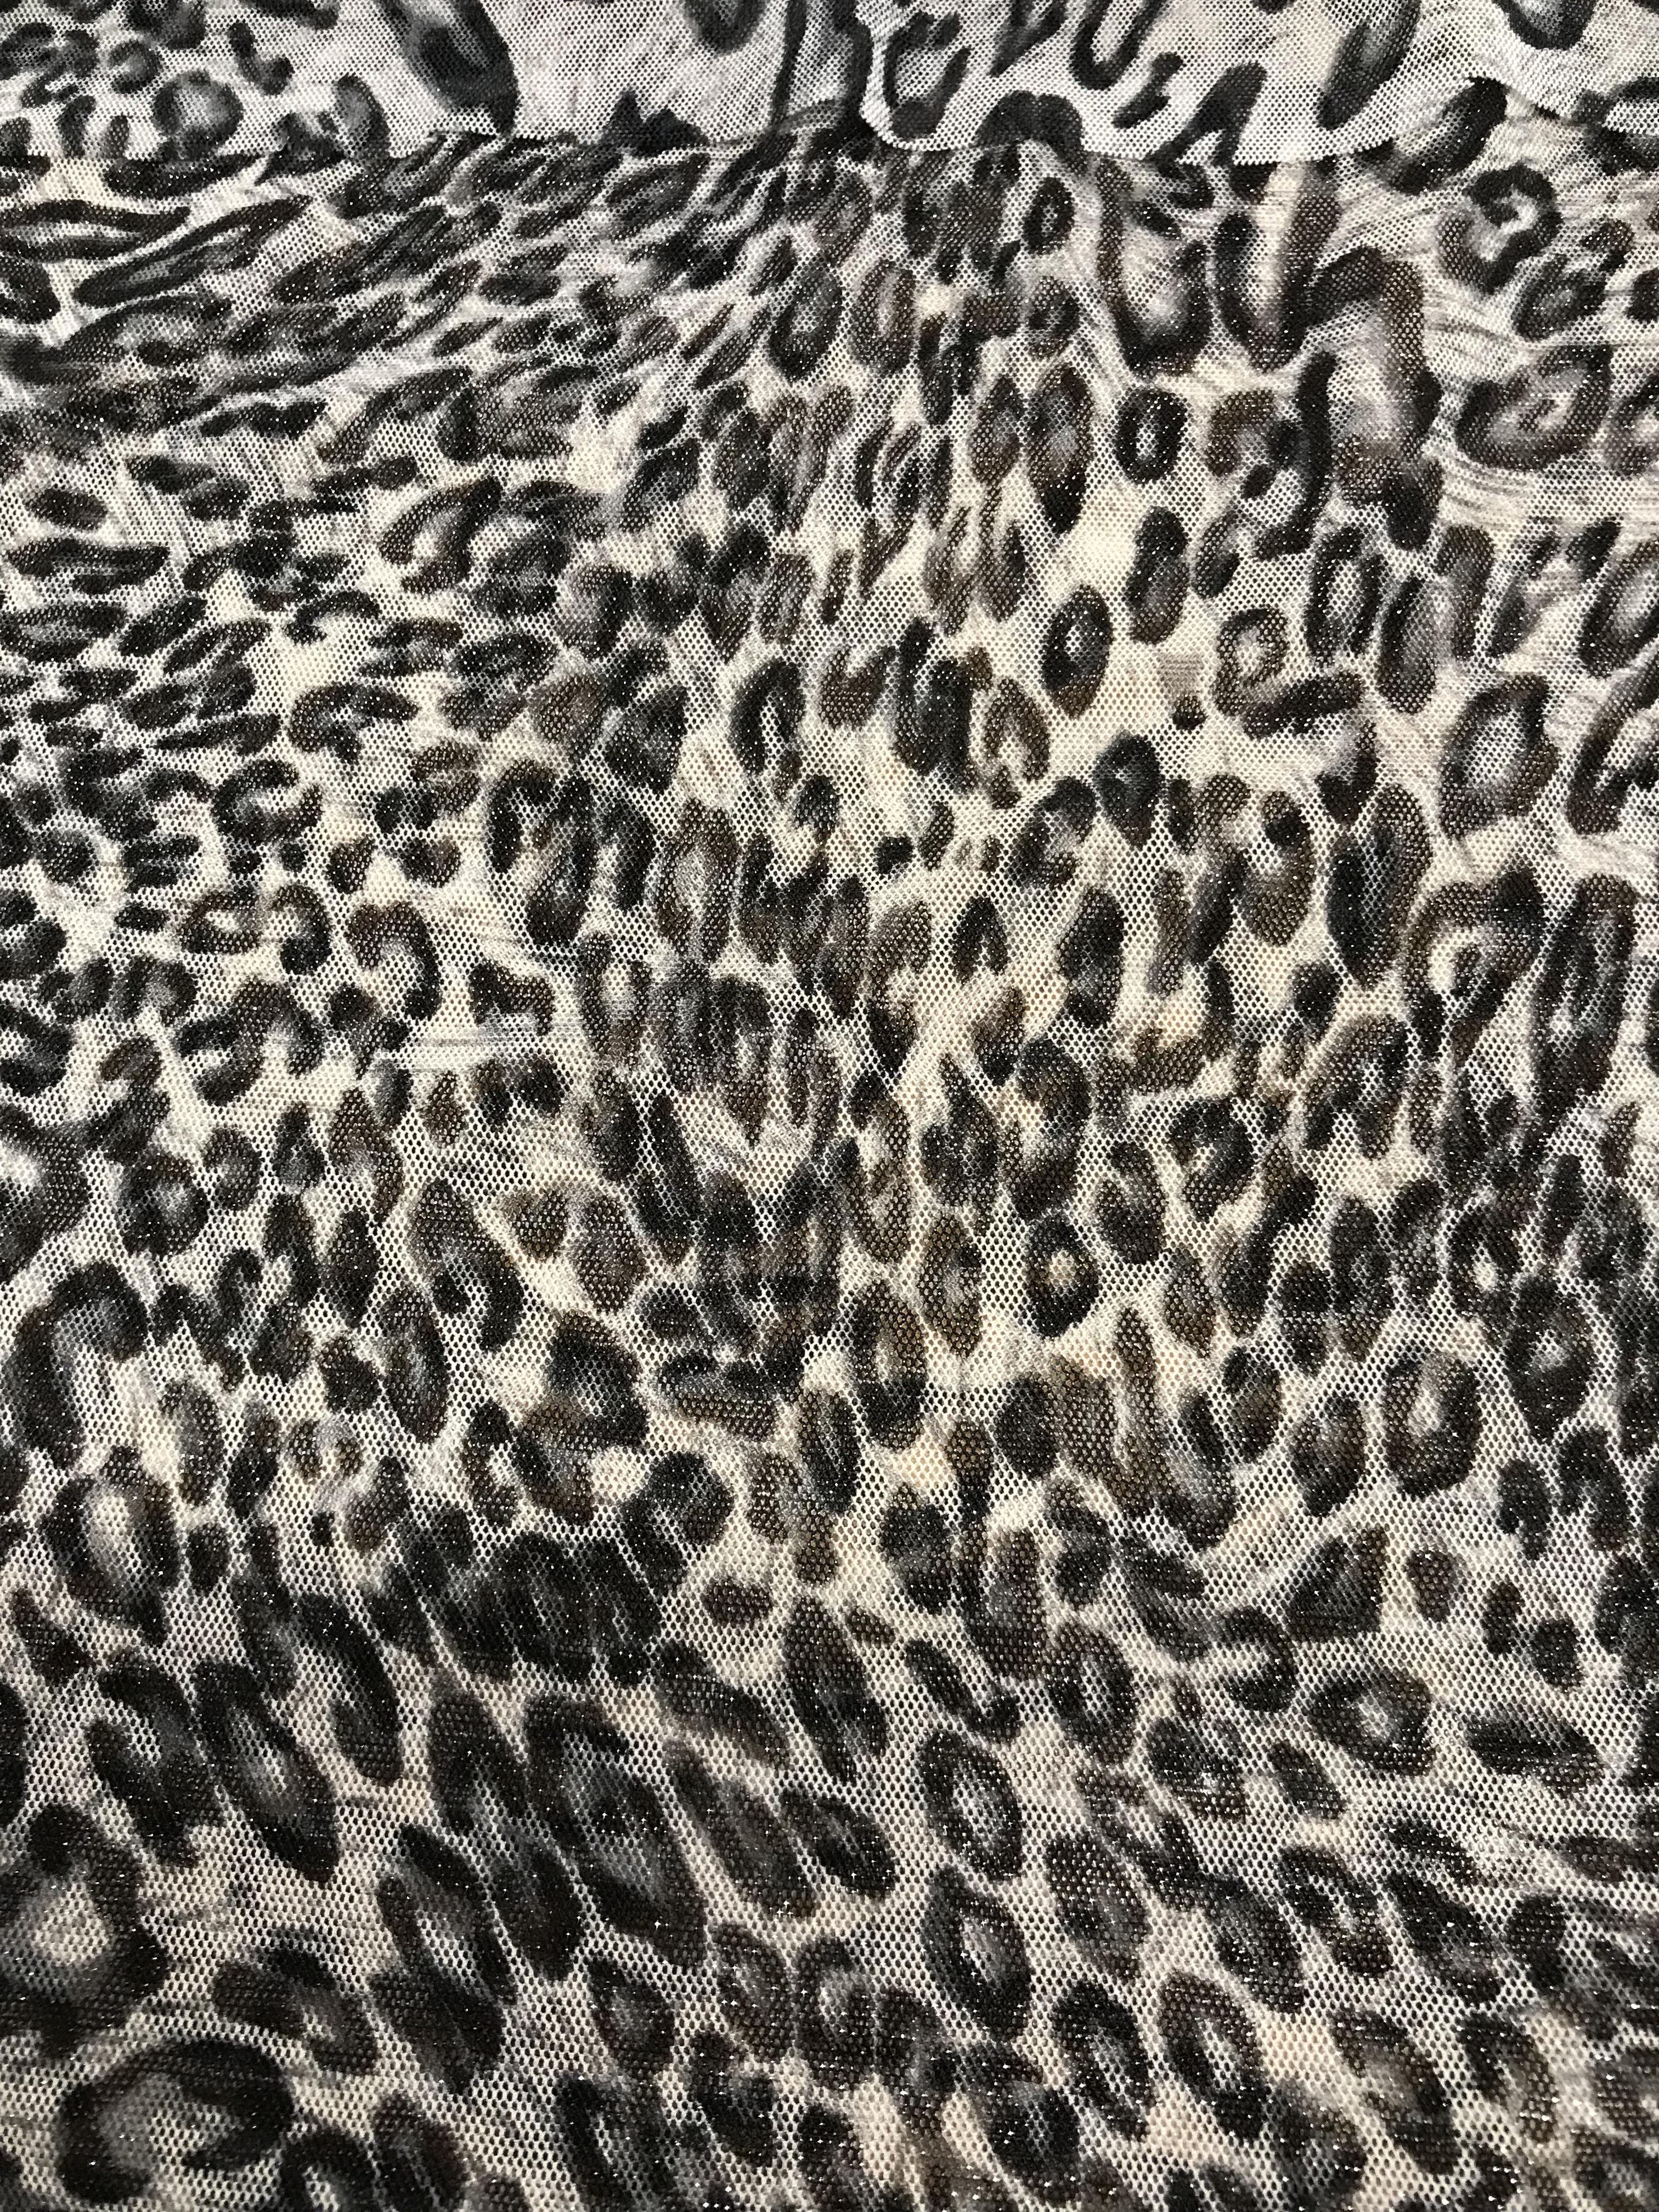 Leopard Mesh -  UK